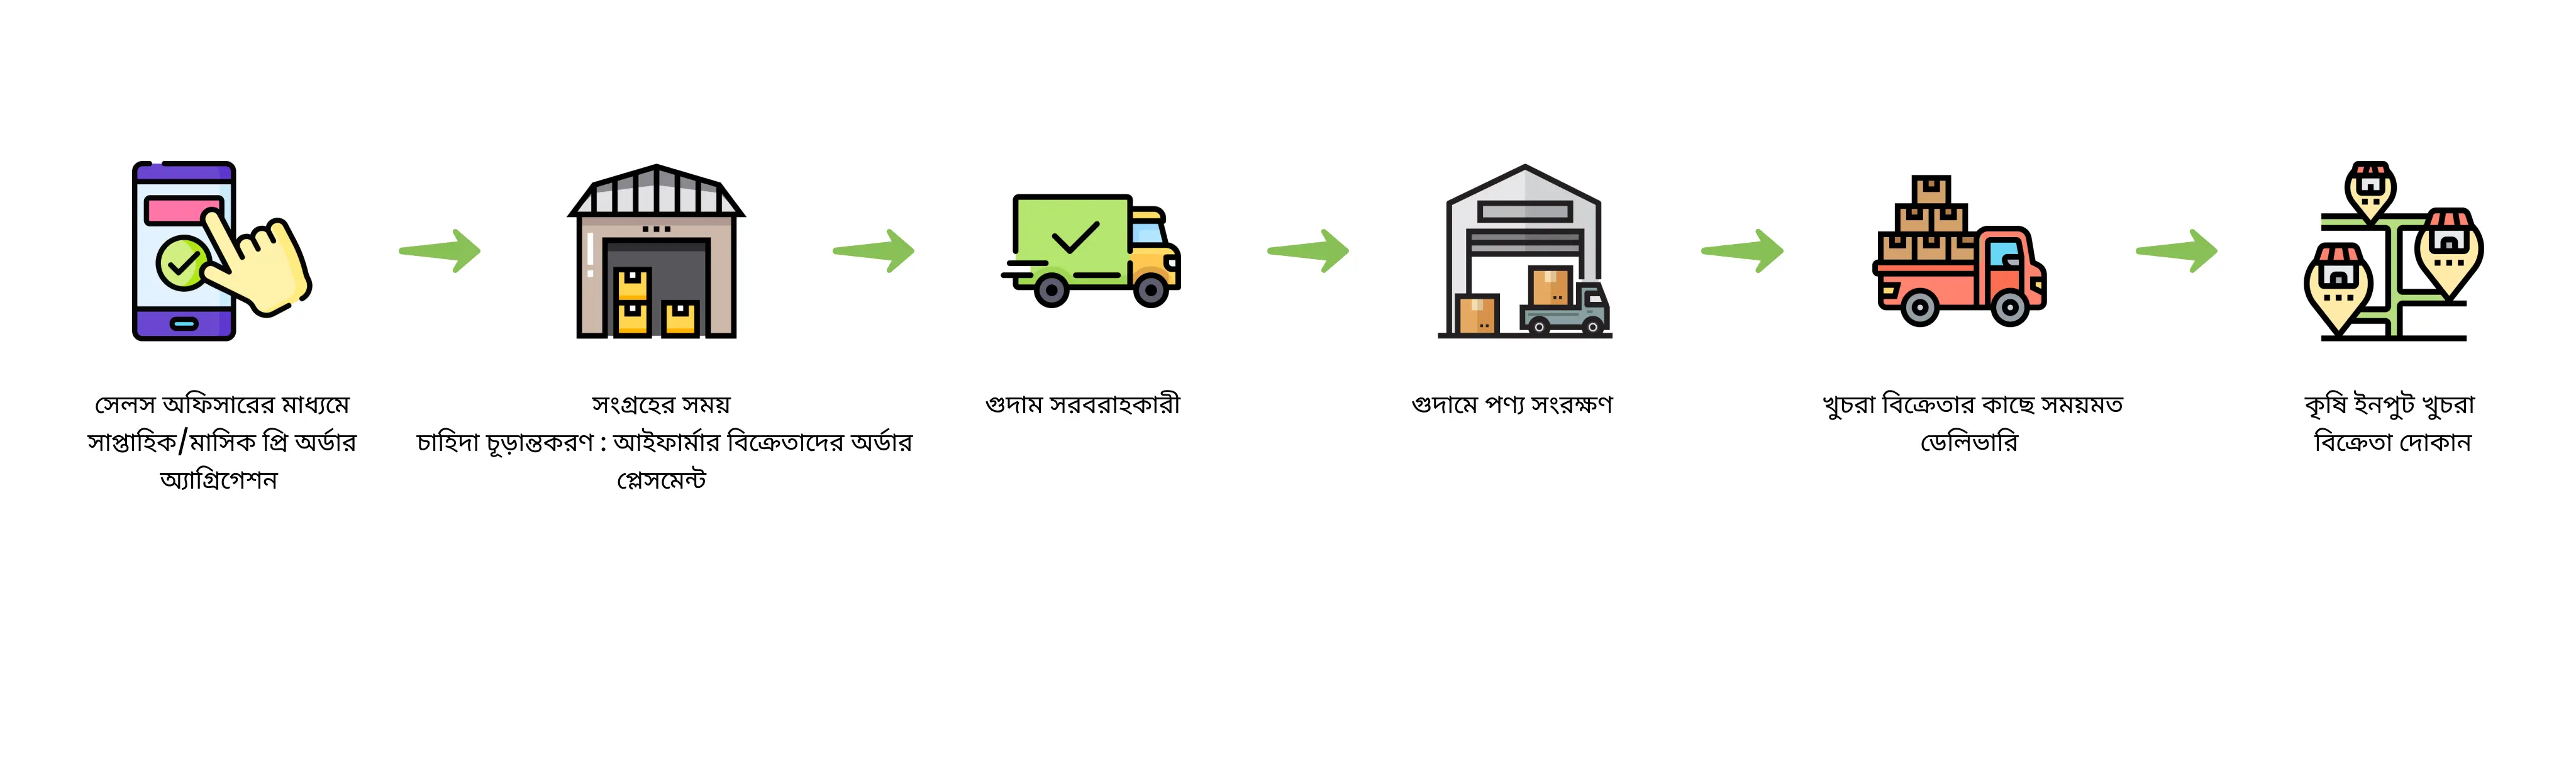 business model for agri input in bangla